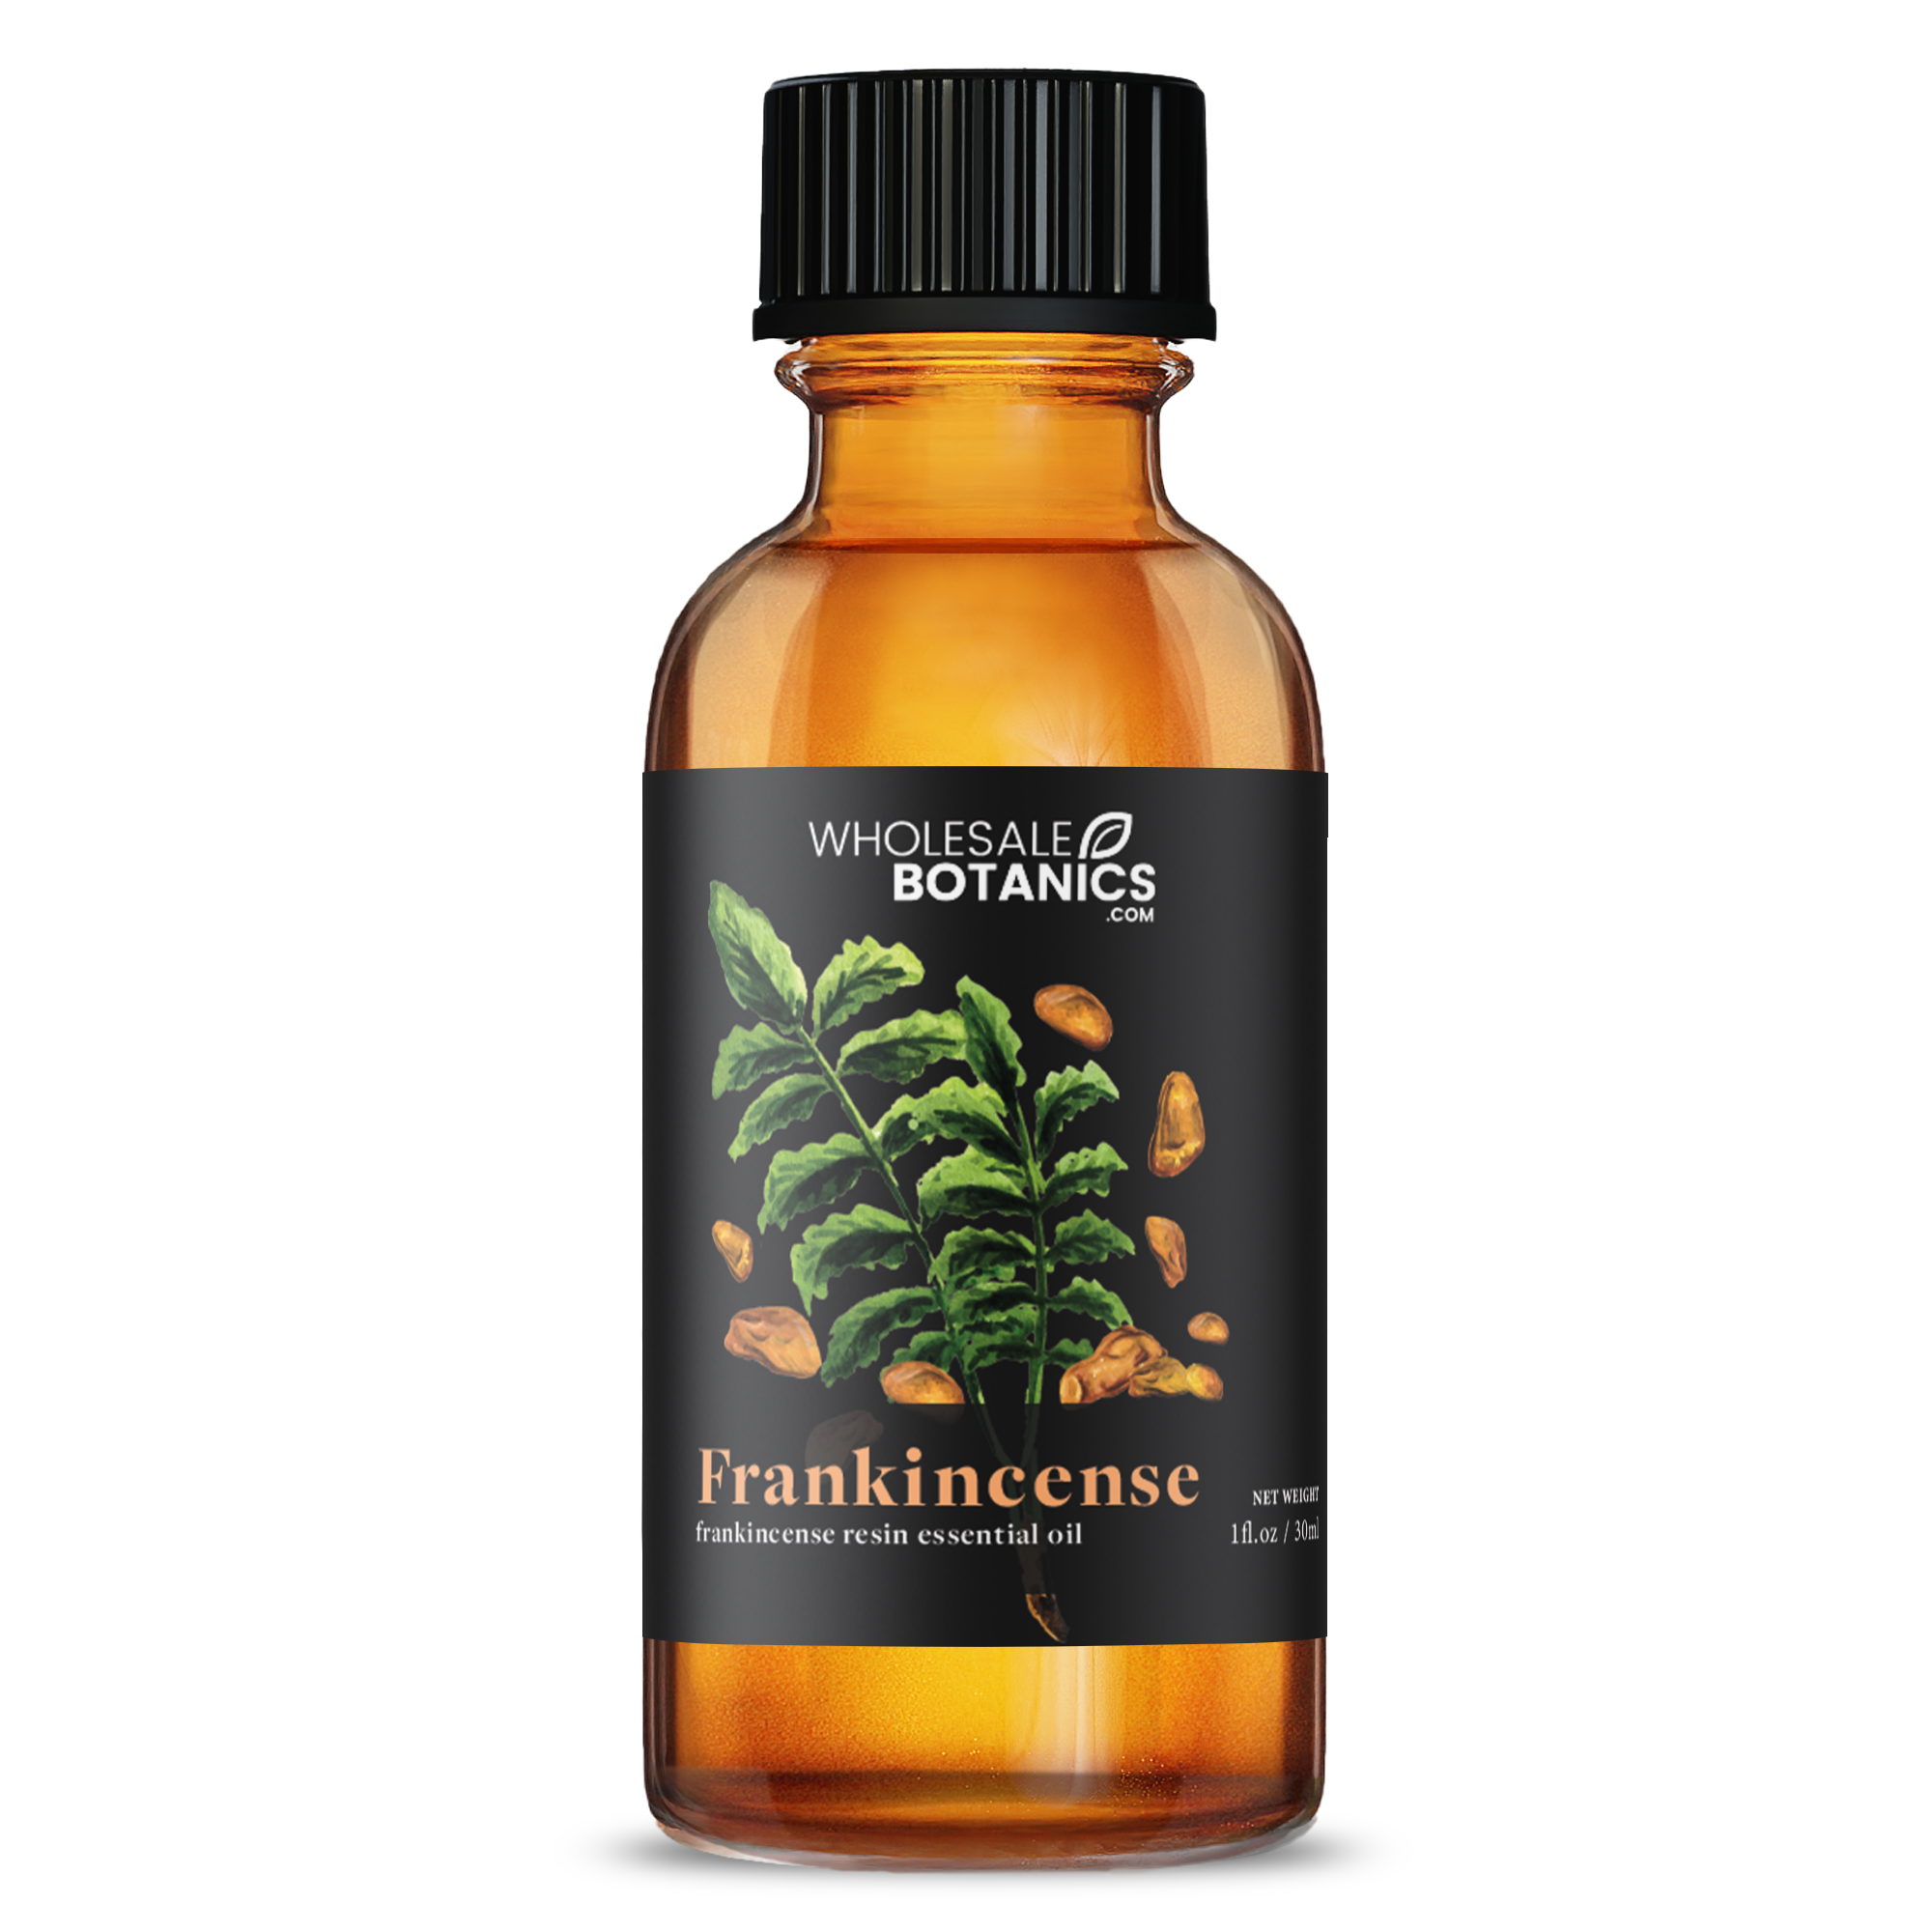 Frankincense & Myrrh 100% Pure Essential Oil 50/50 Therapeutic